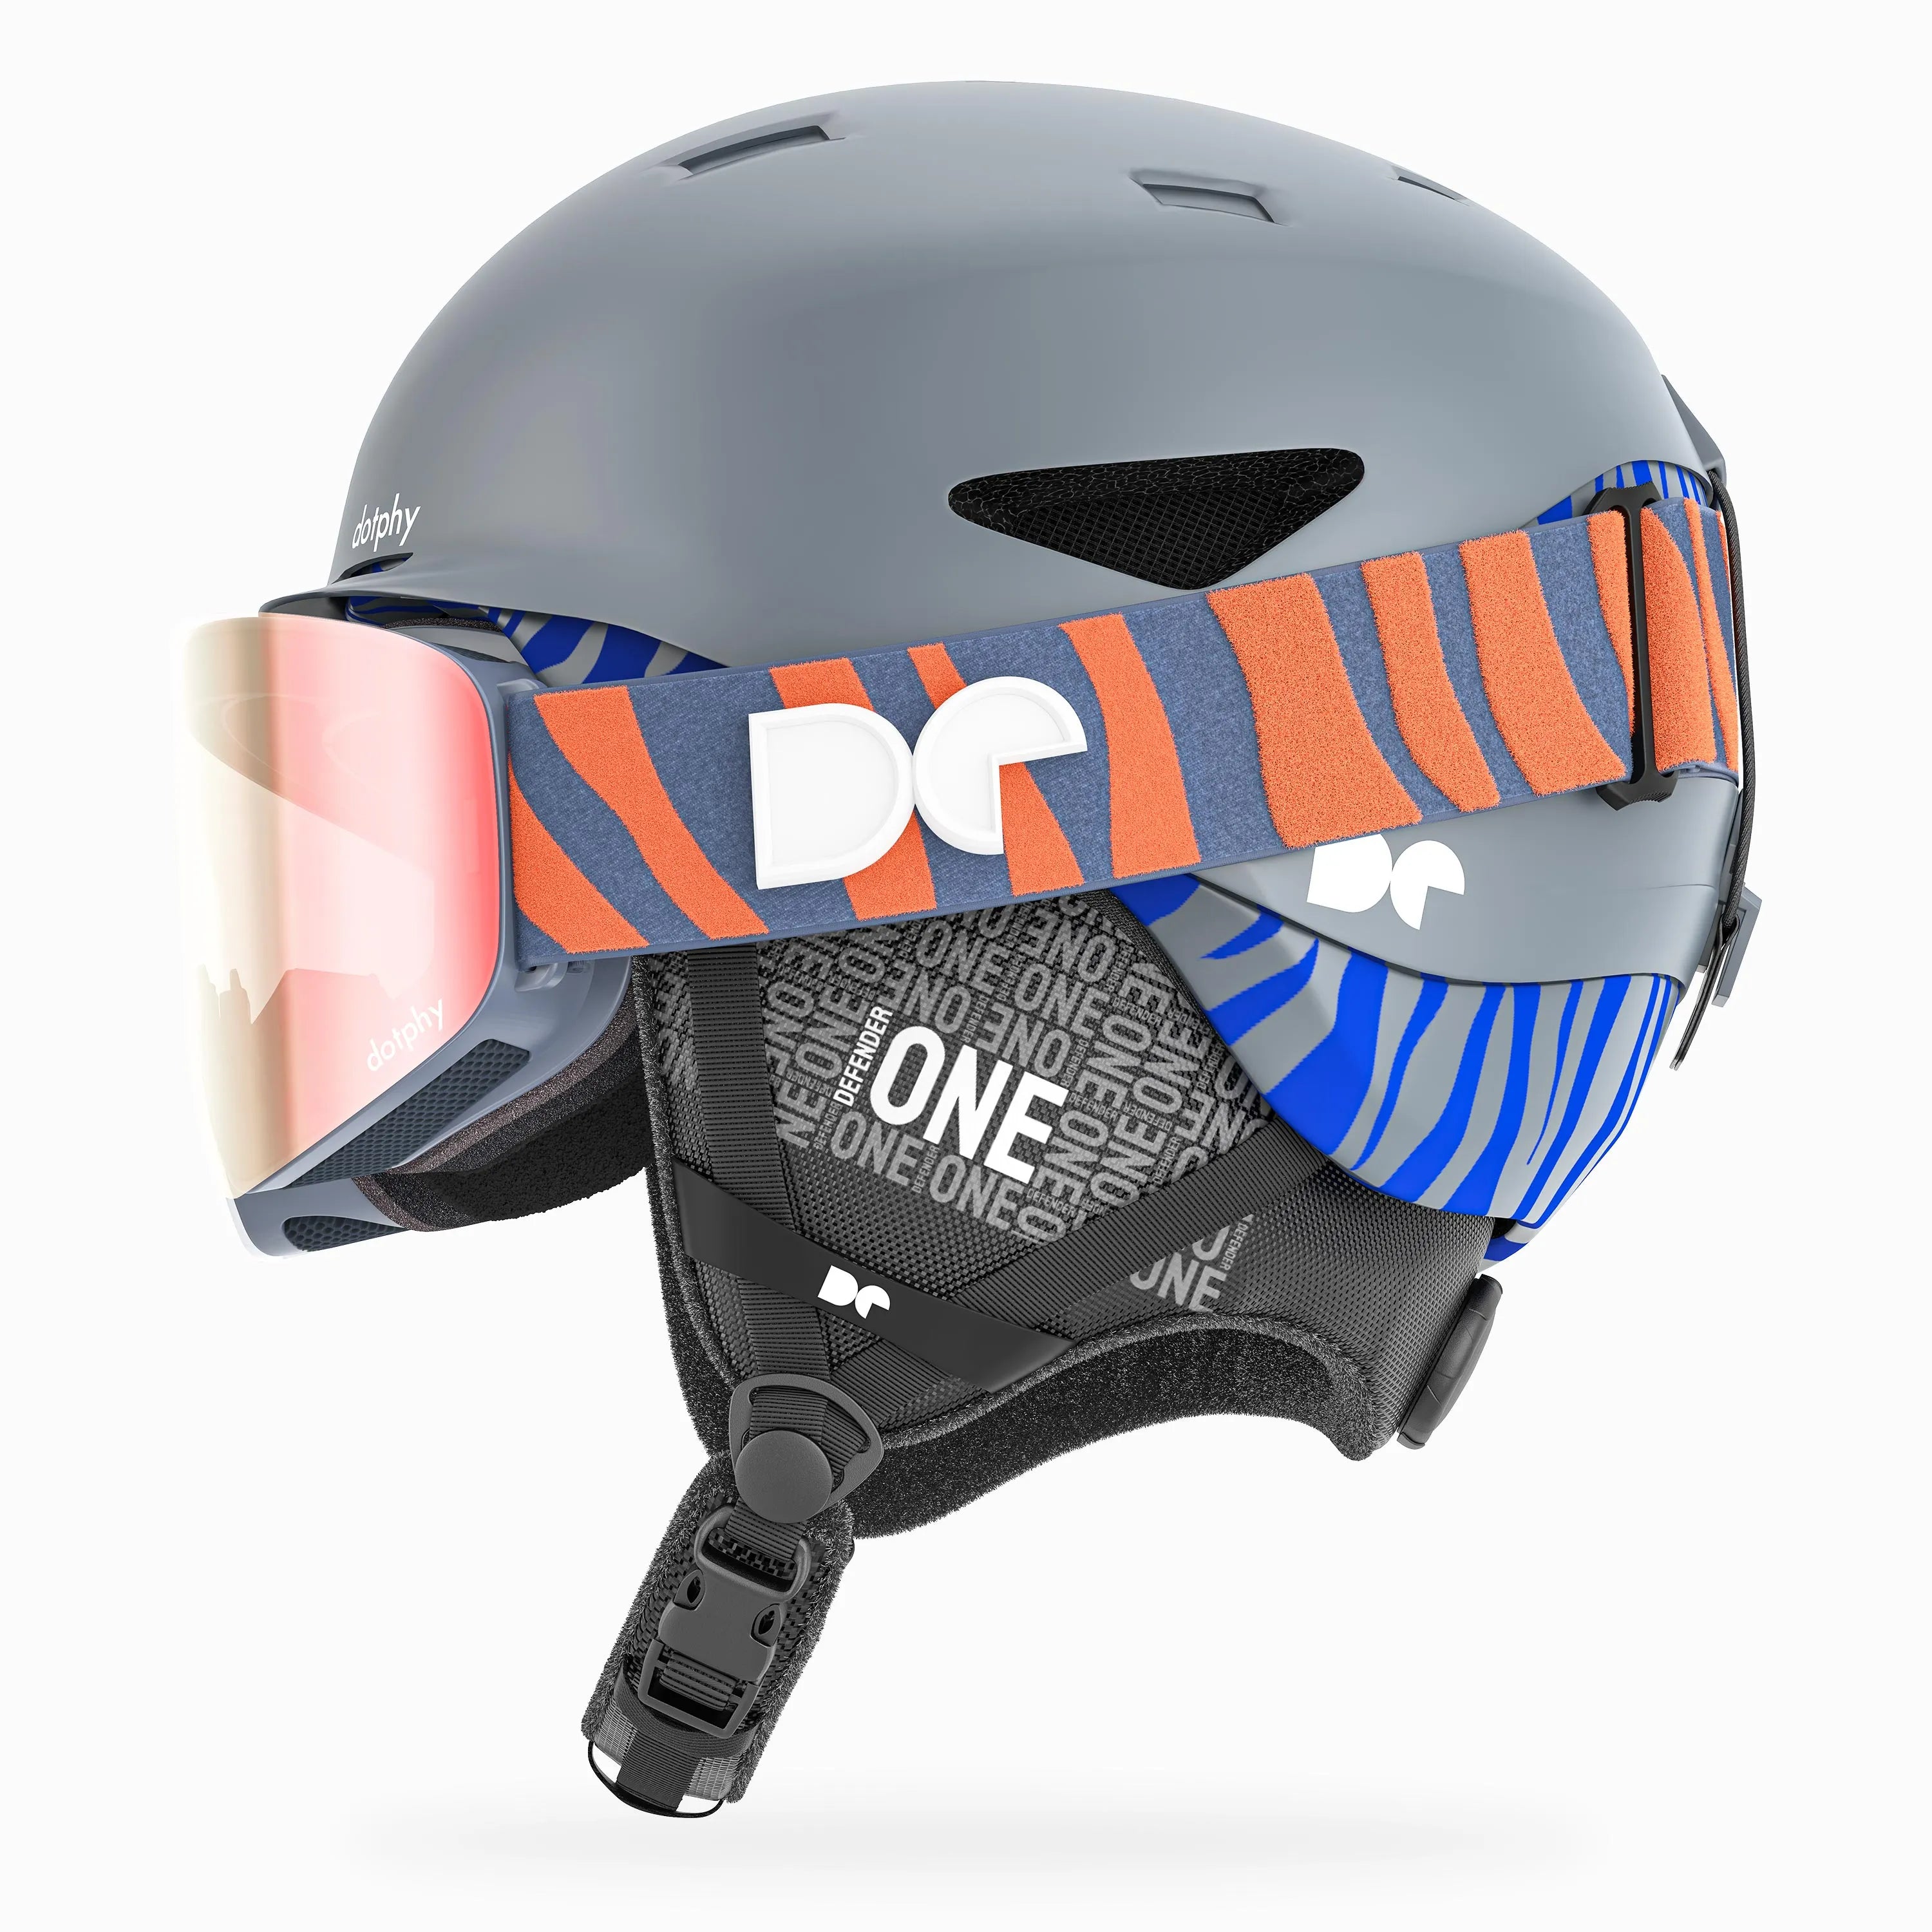 Defender One Space Gary Ski Helmet + Defender 1000 Pro Volcano Ski Goggle Combo